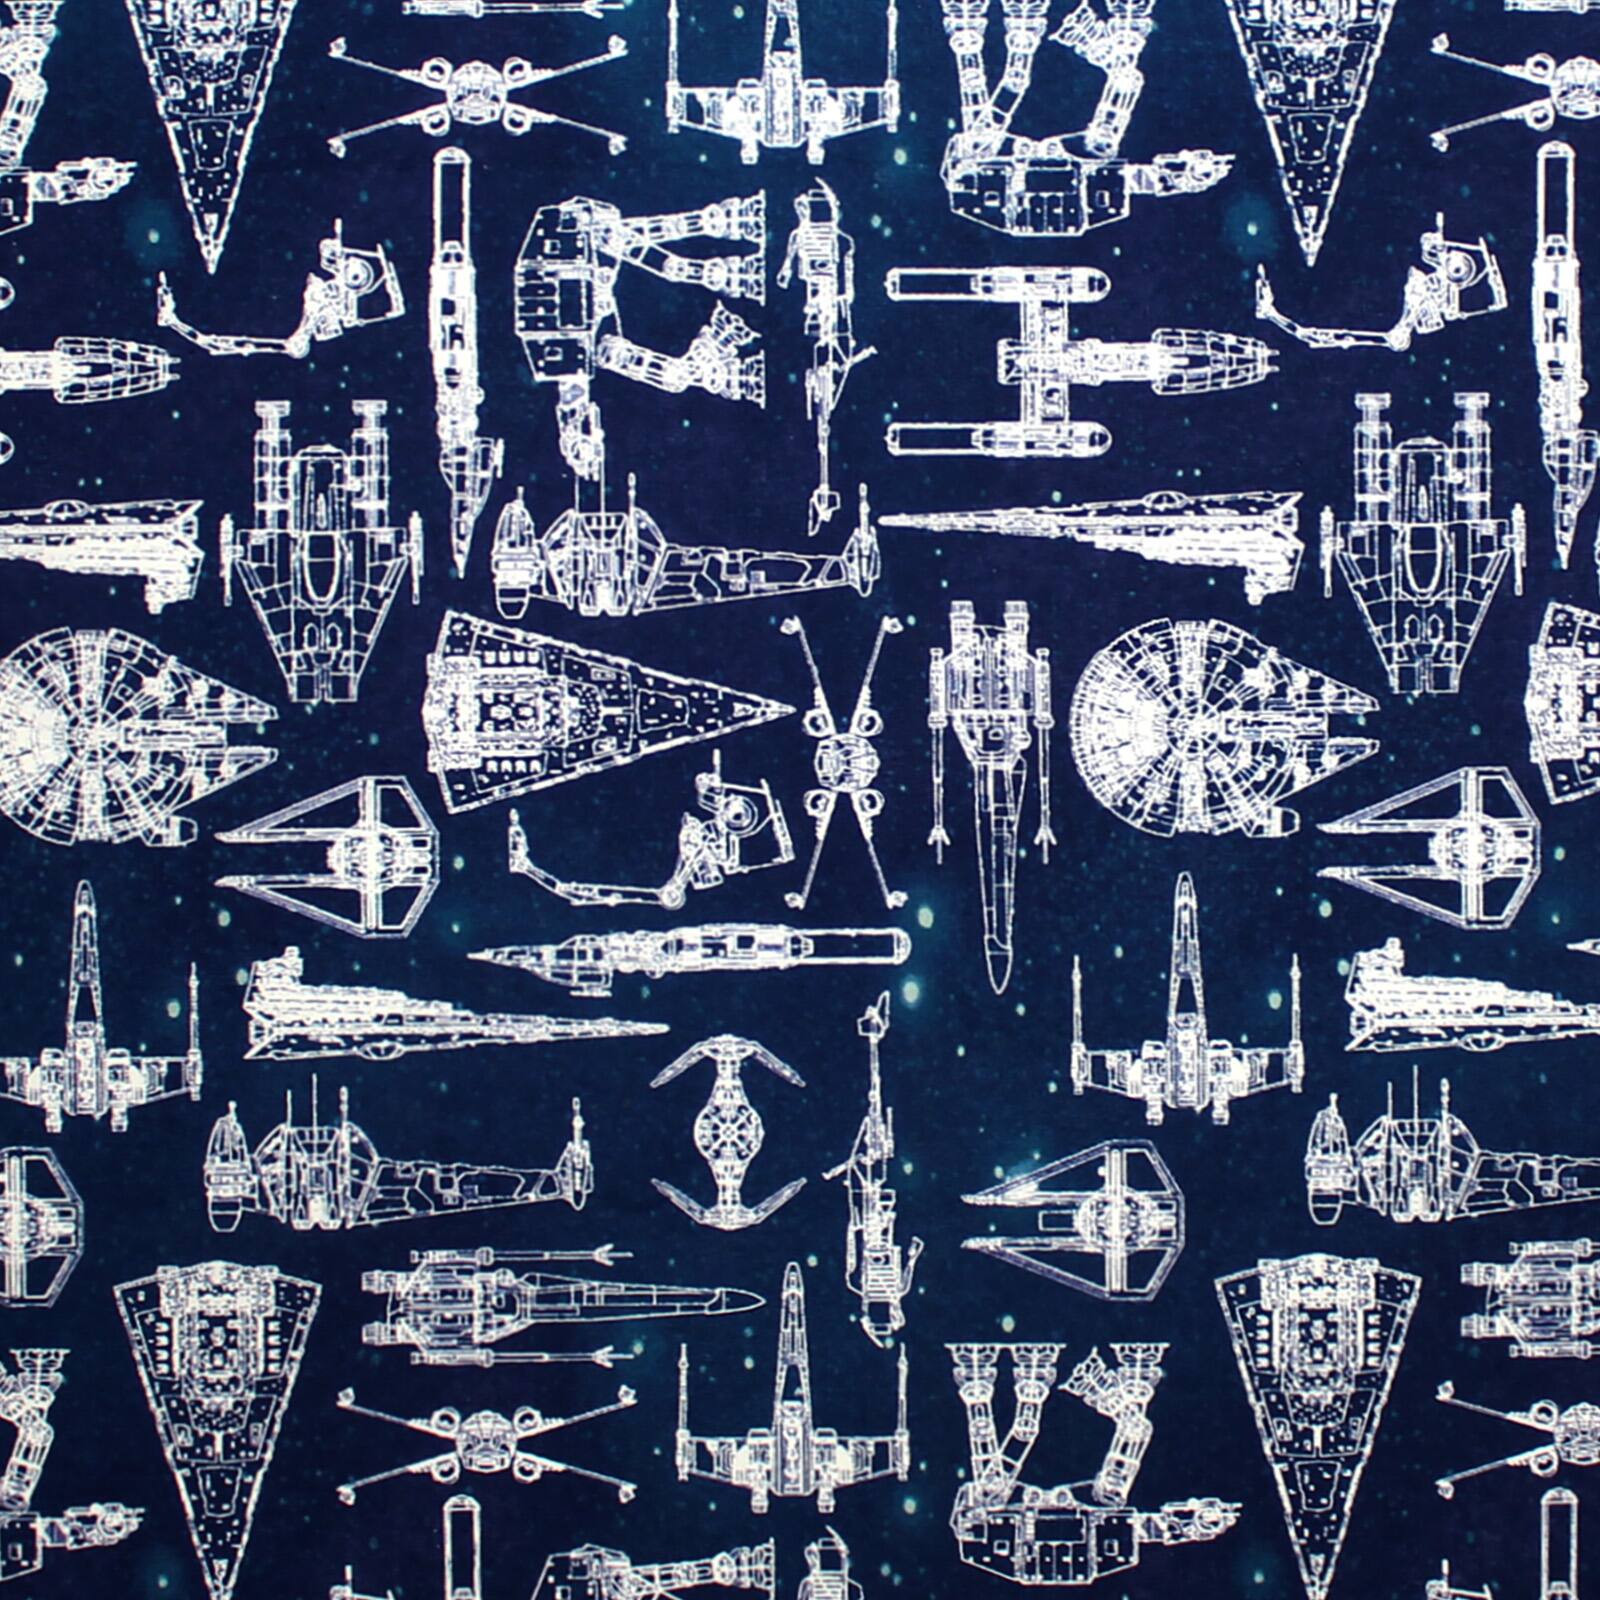 star wars quilt fabric